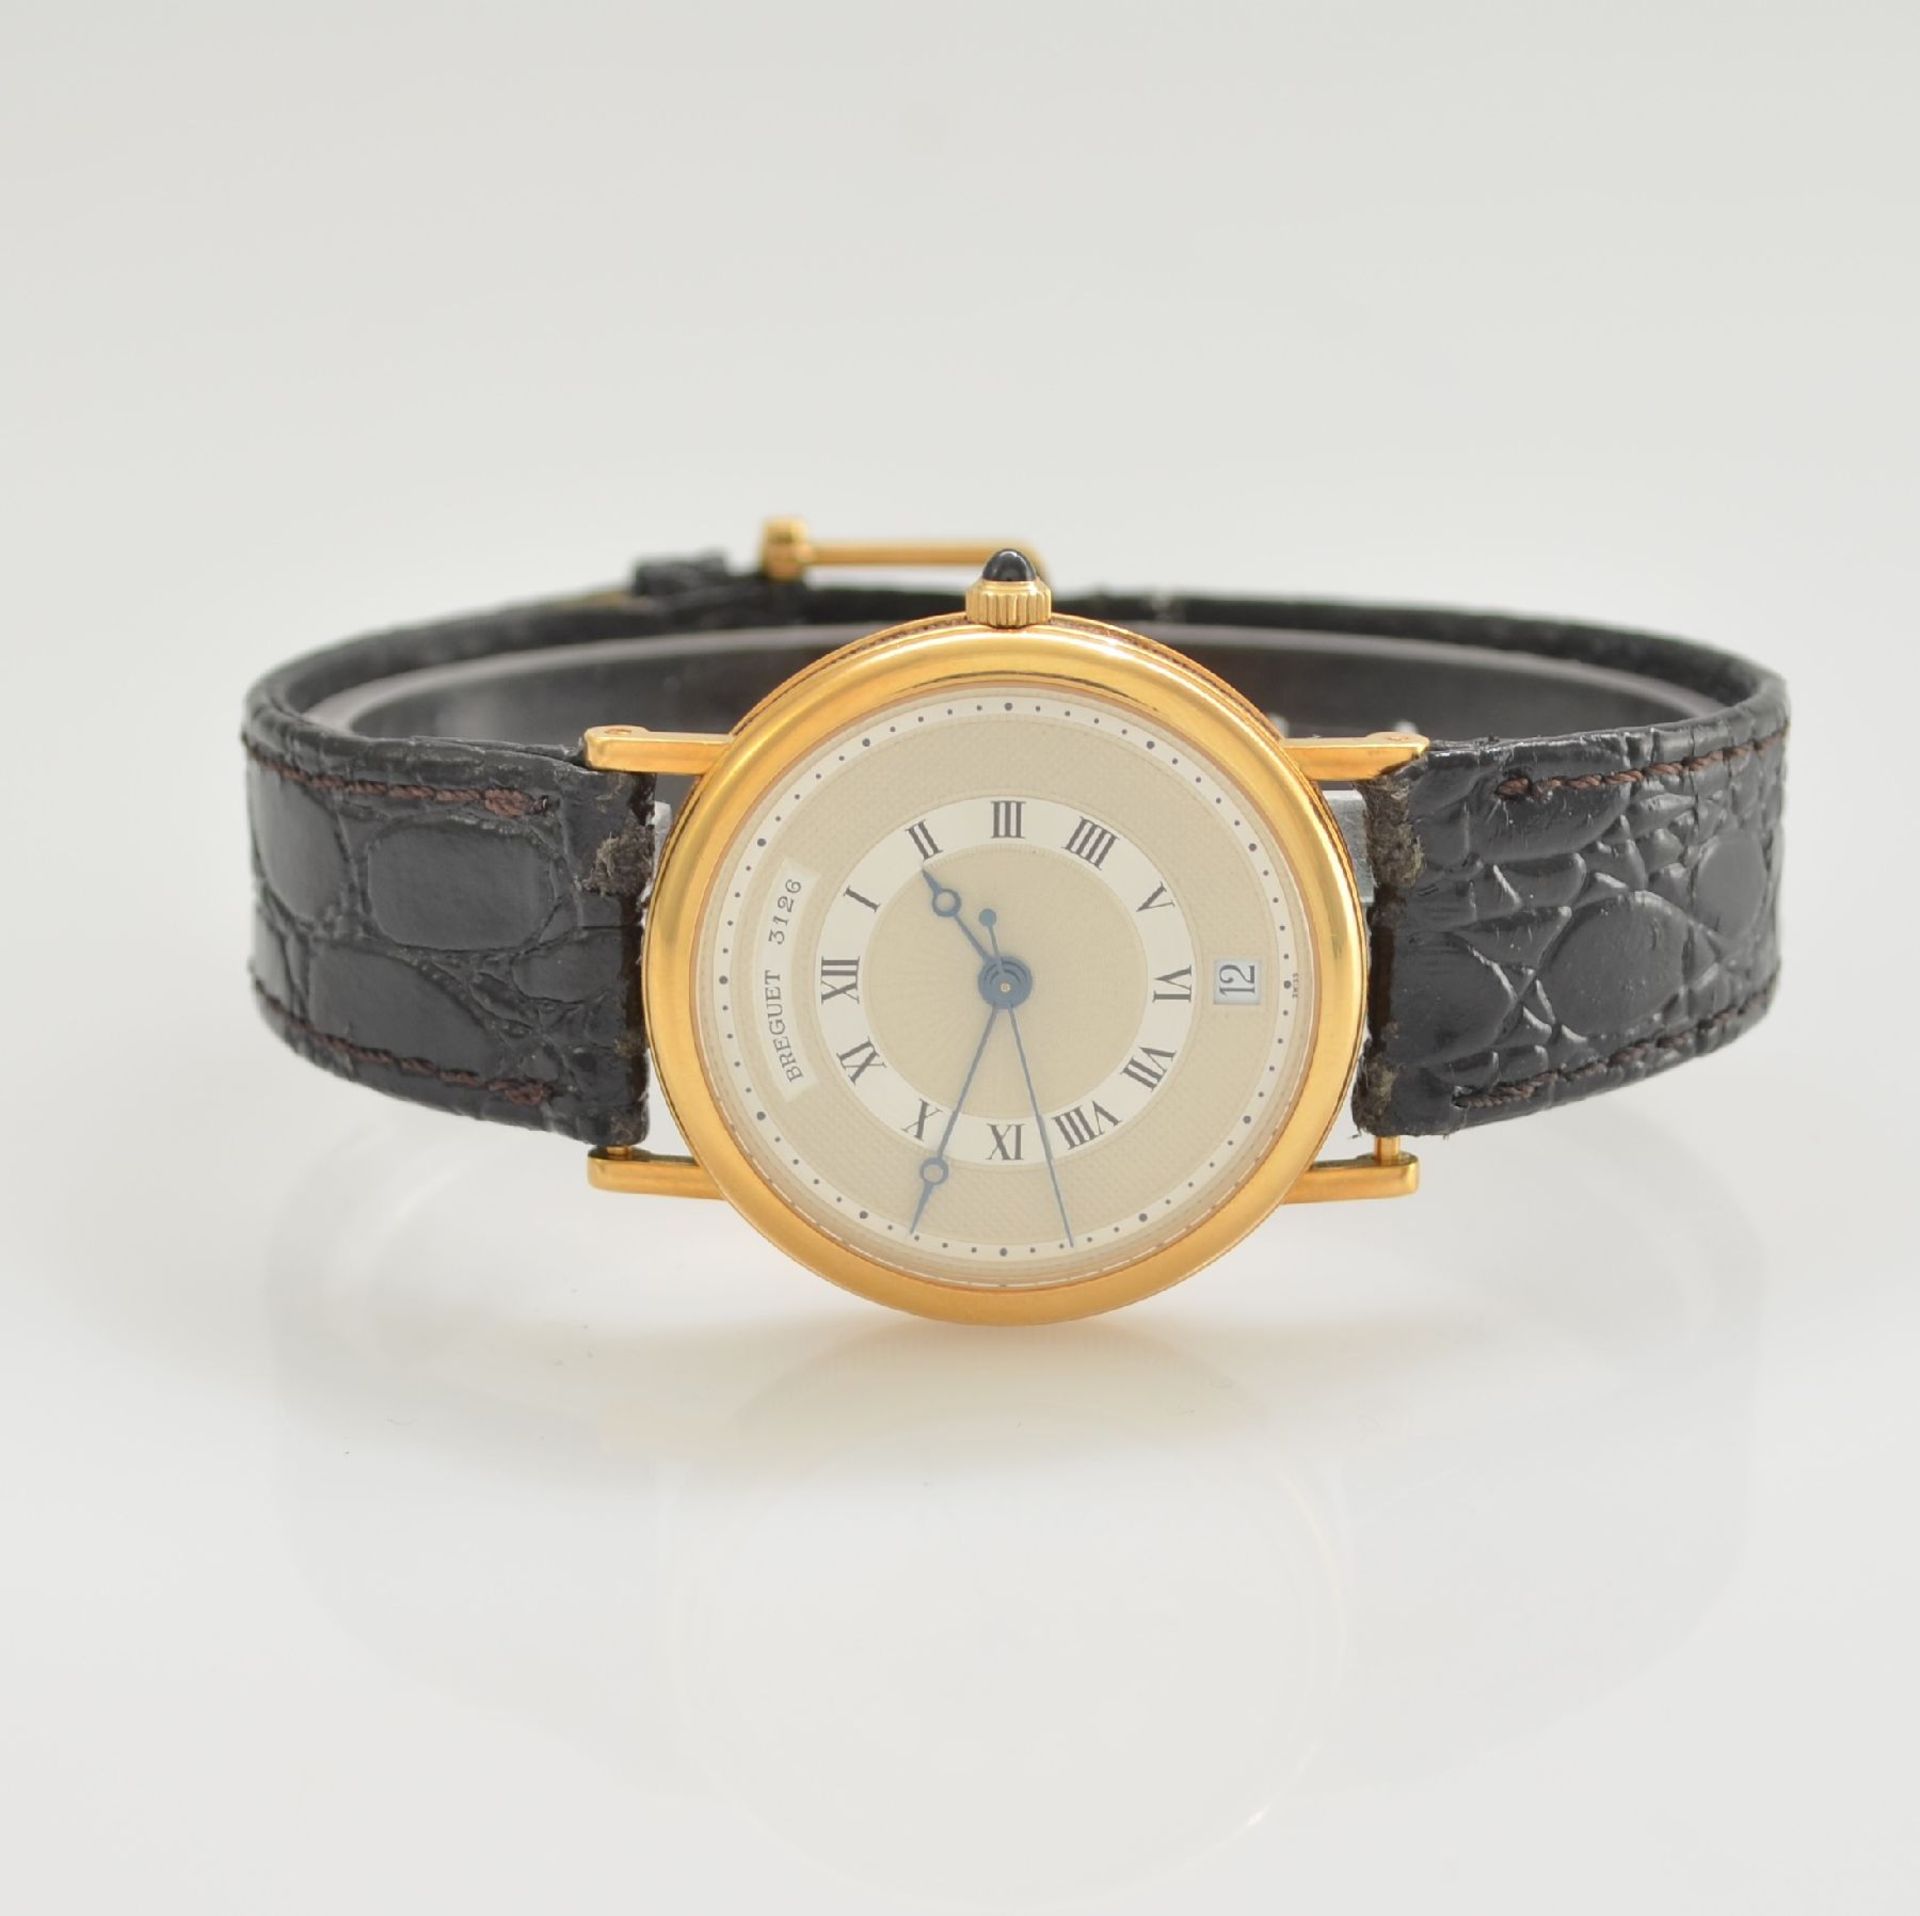 BREGUET Classique Armbanduhr in GG 750/000 No. 3126, Schweiz um 1990, 3-teil. Geh. inkl. Lederband